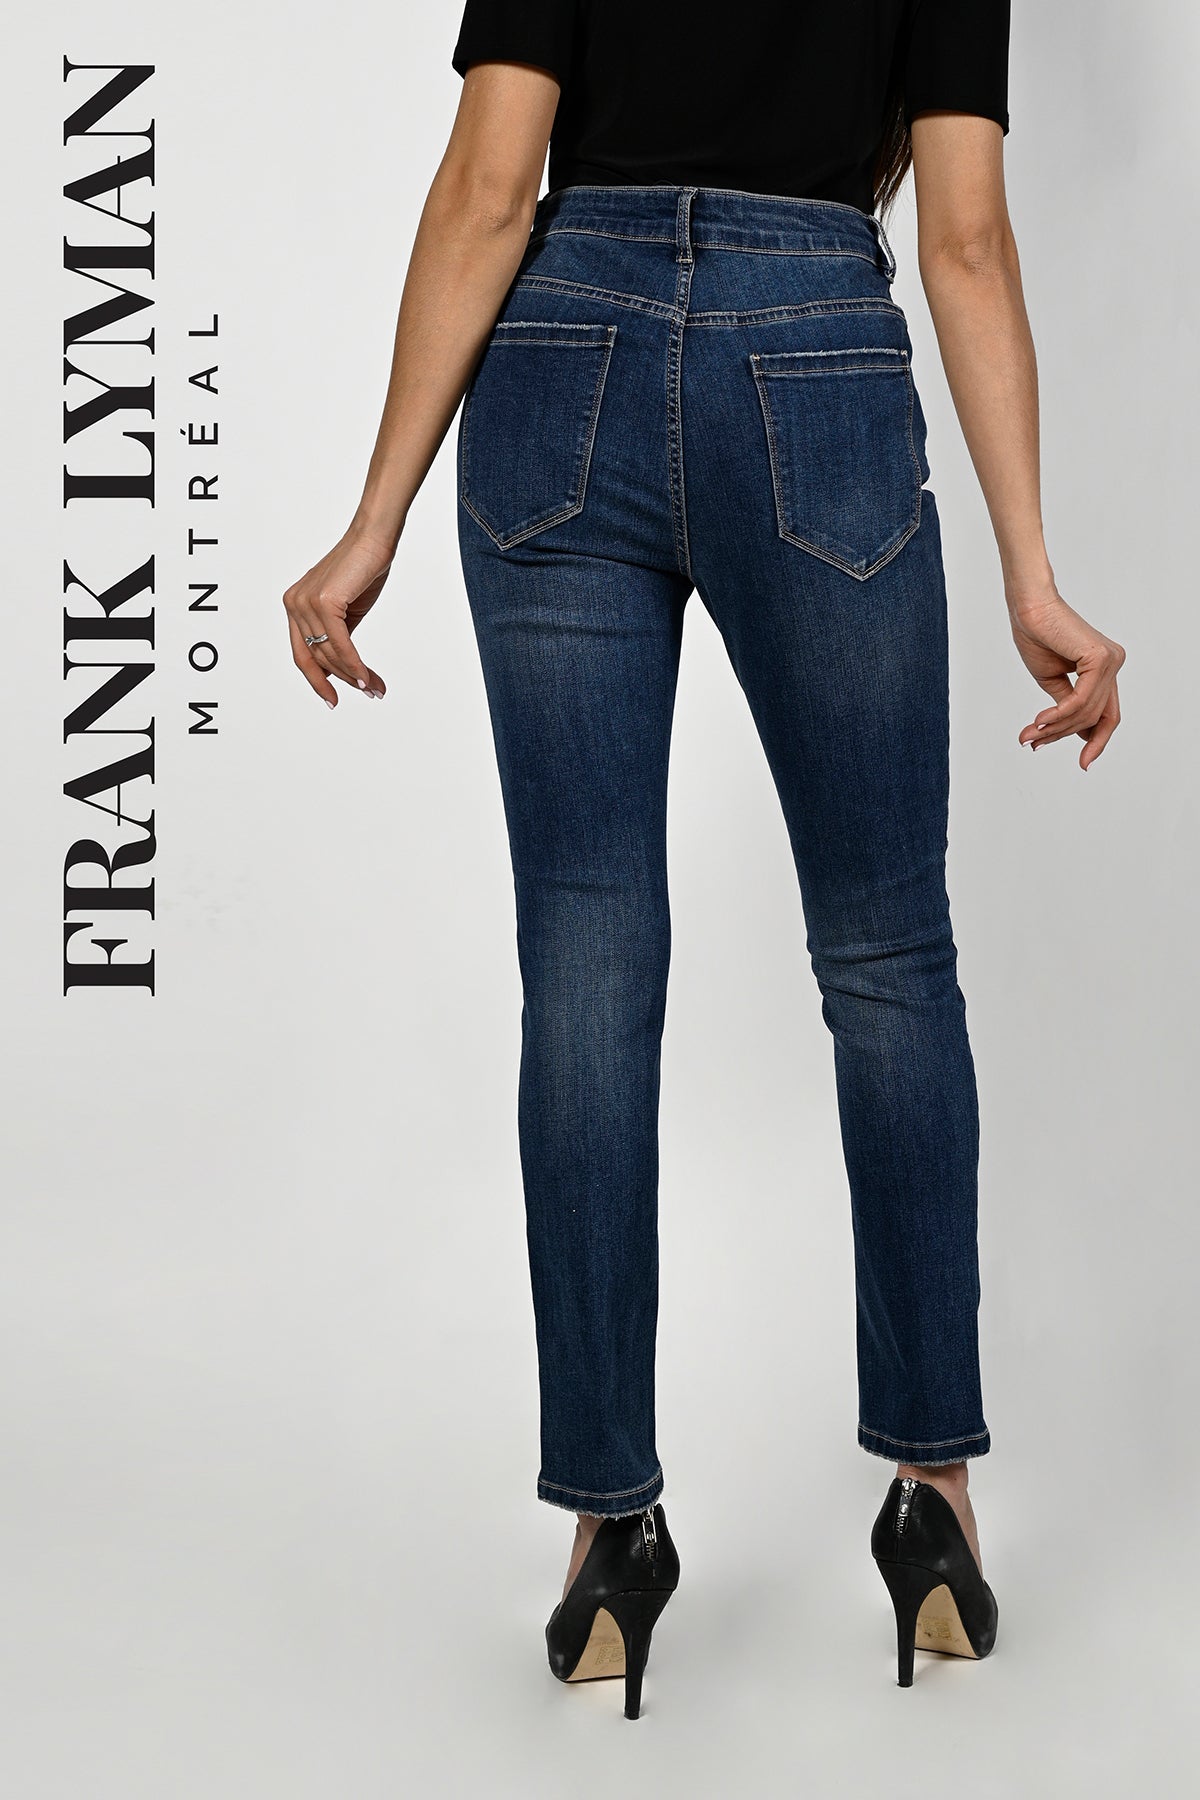 Frank Lyman Montreal Jeans-Buy Frank Lyman Montreal Jeans Online-Frank Lyman Montreal Blue Jeans-Frank Lyman Montreal Sequin Jeans-Frank Lyman Montreal Online Jean Shop